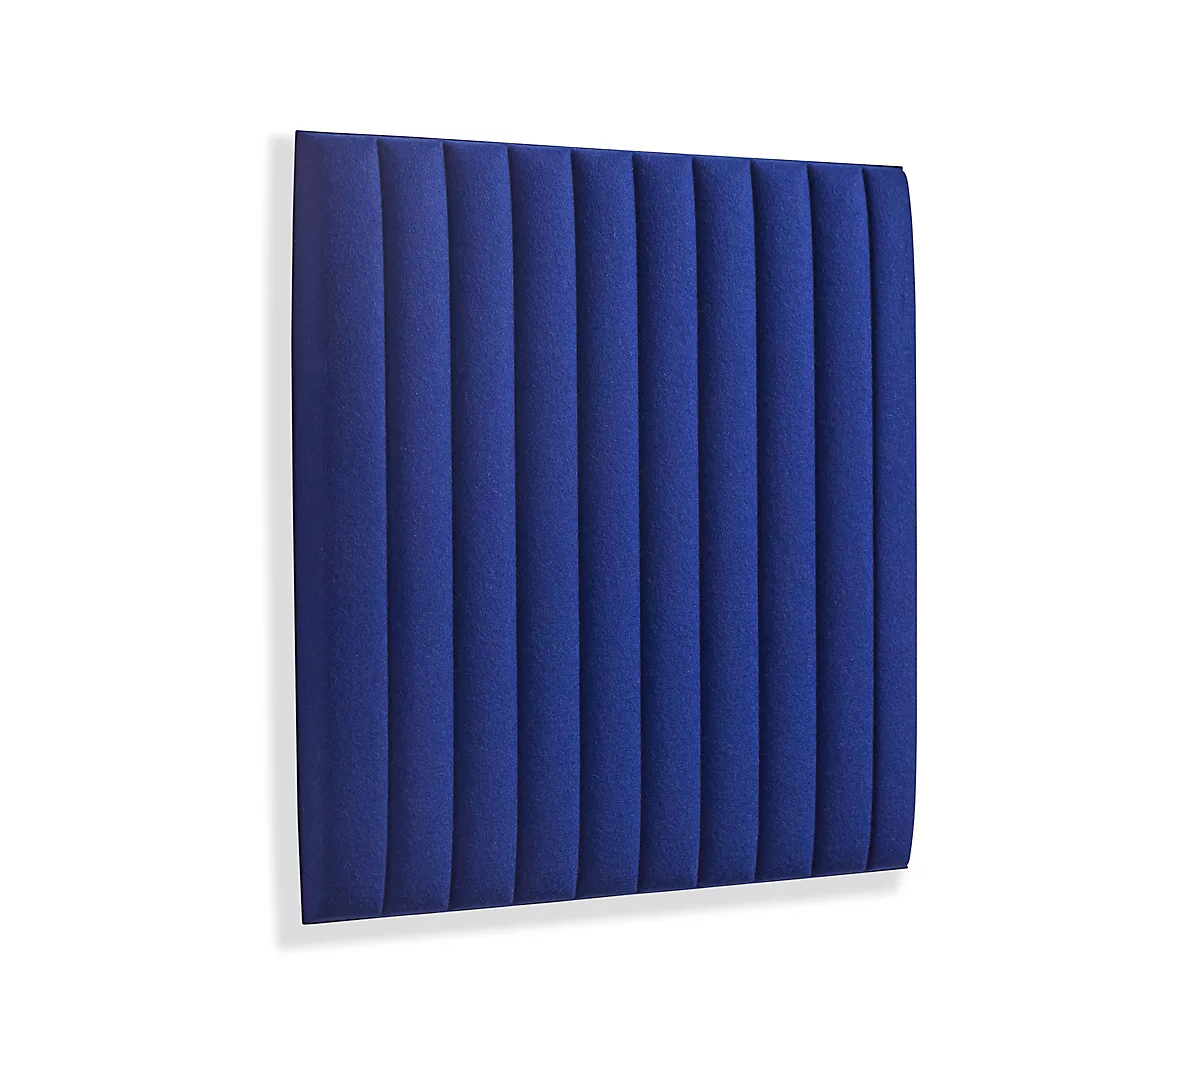 Wandpaneele m. Magnetbefestigung, B 604 x T 604 x H 47 mm, versch. Stripes-Design, dunkelblau